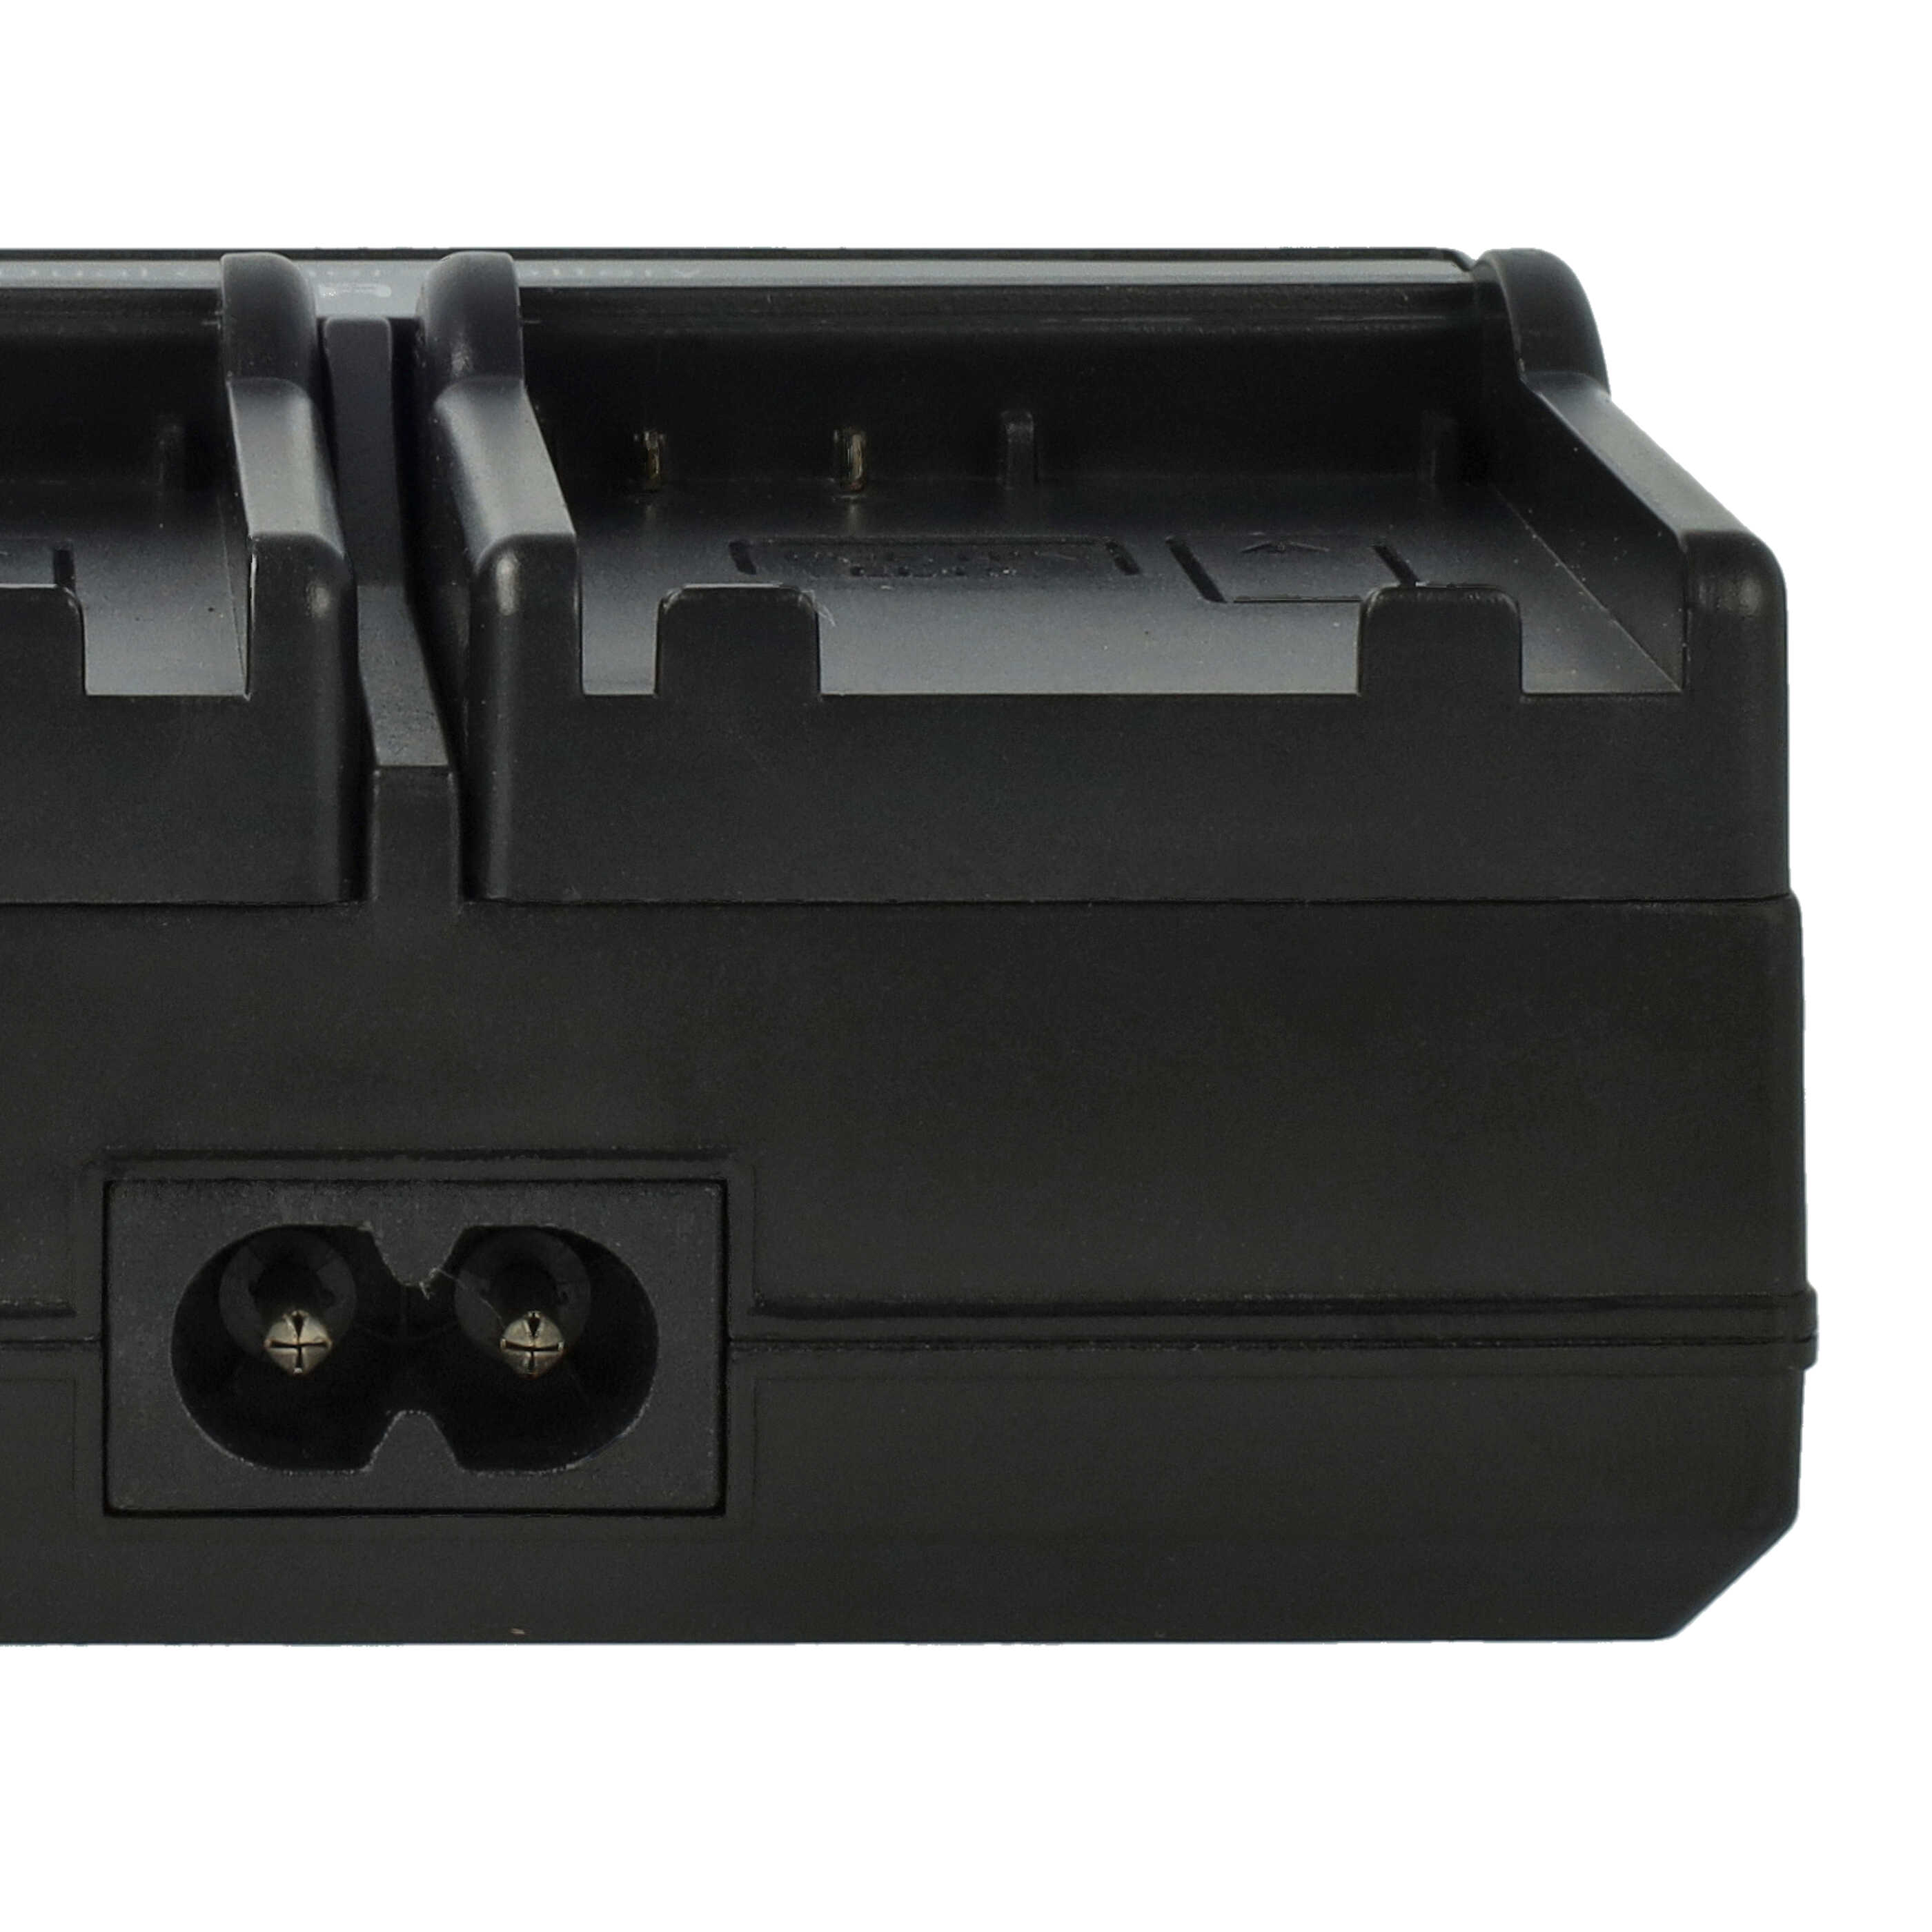 Ładowarka do aparatu Coolpix D750 i innych - ładowarka akumulatora 0.5 / 0.9 A, 4.2/8.4 V